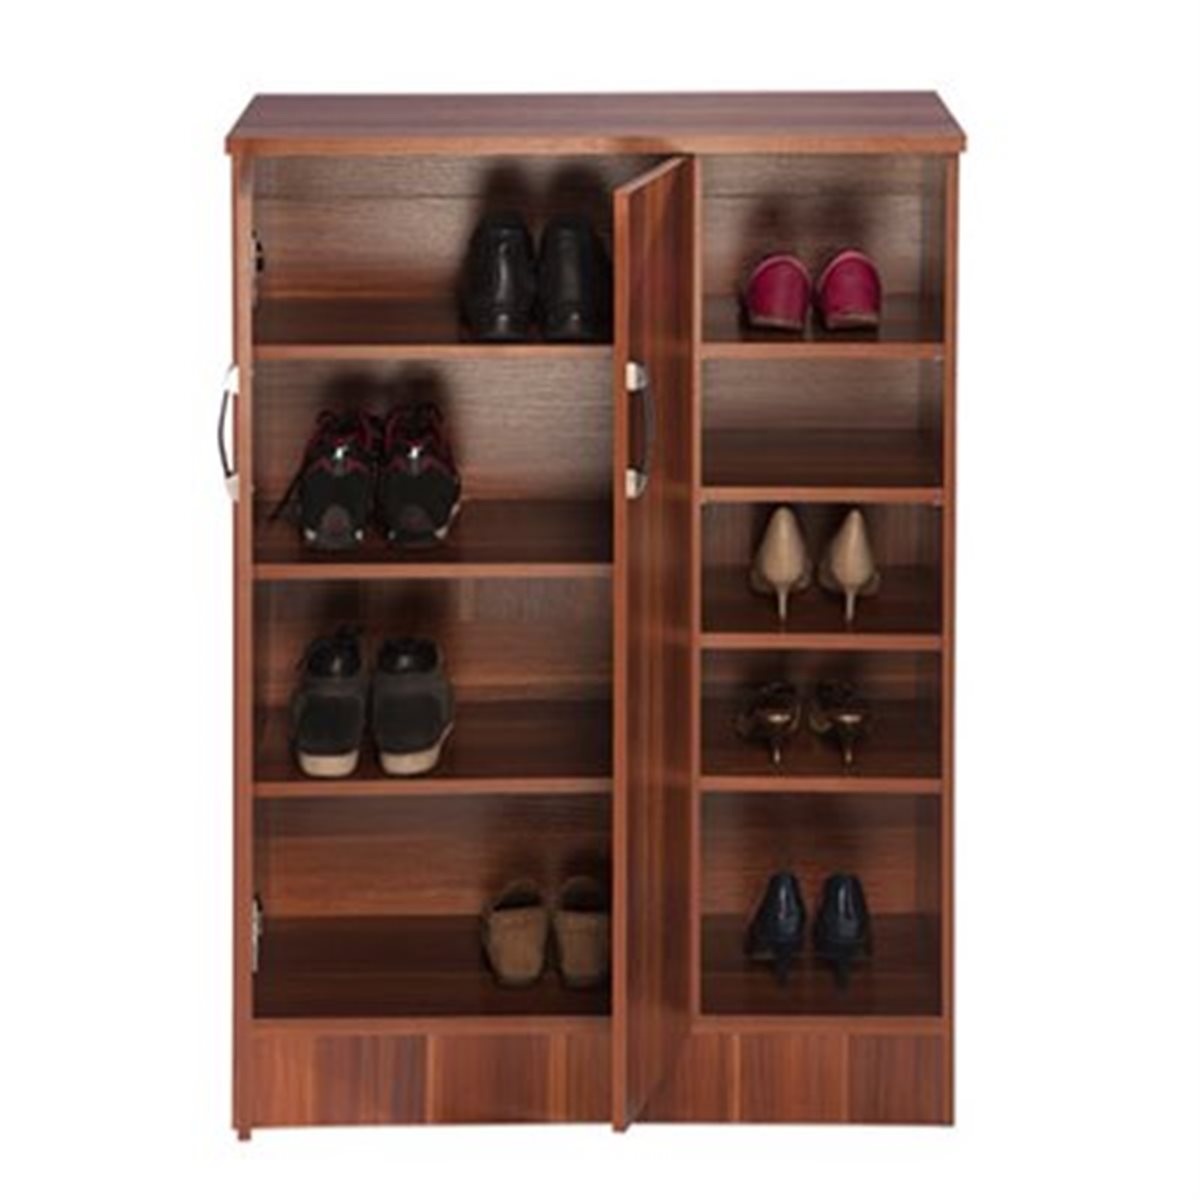 Nilkamal Easton Shoe Cabinet W36xd15xh35 Inch Mrp 8 500 00 Our